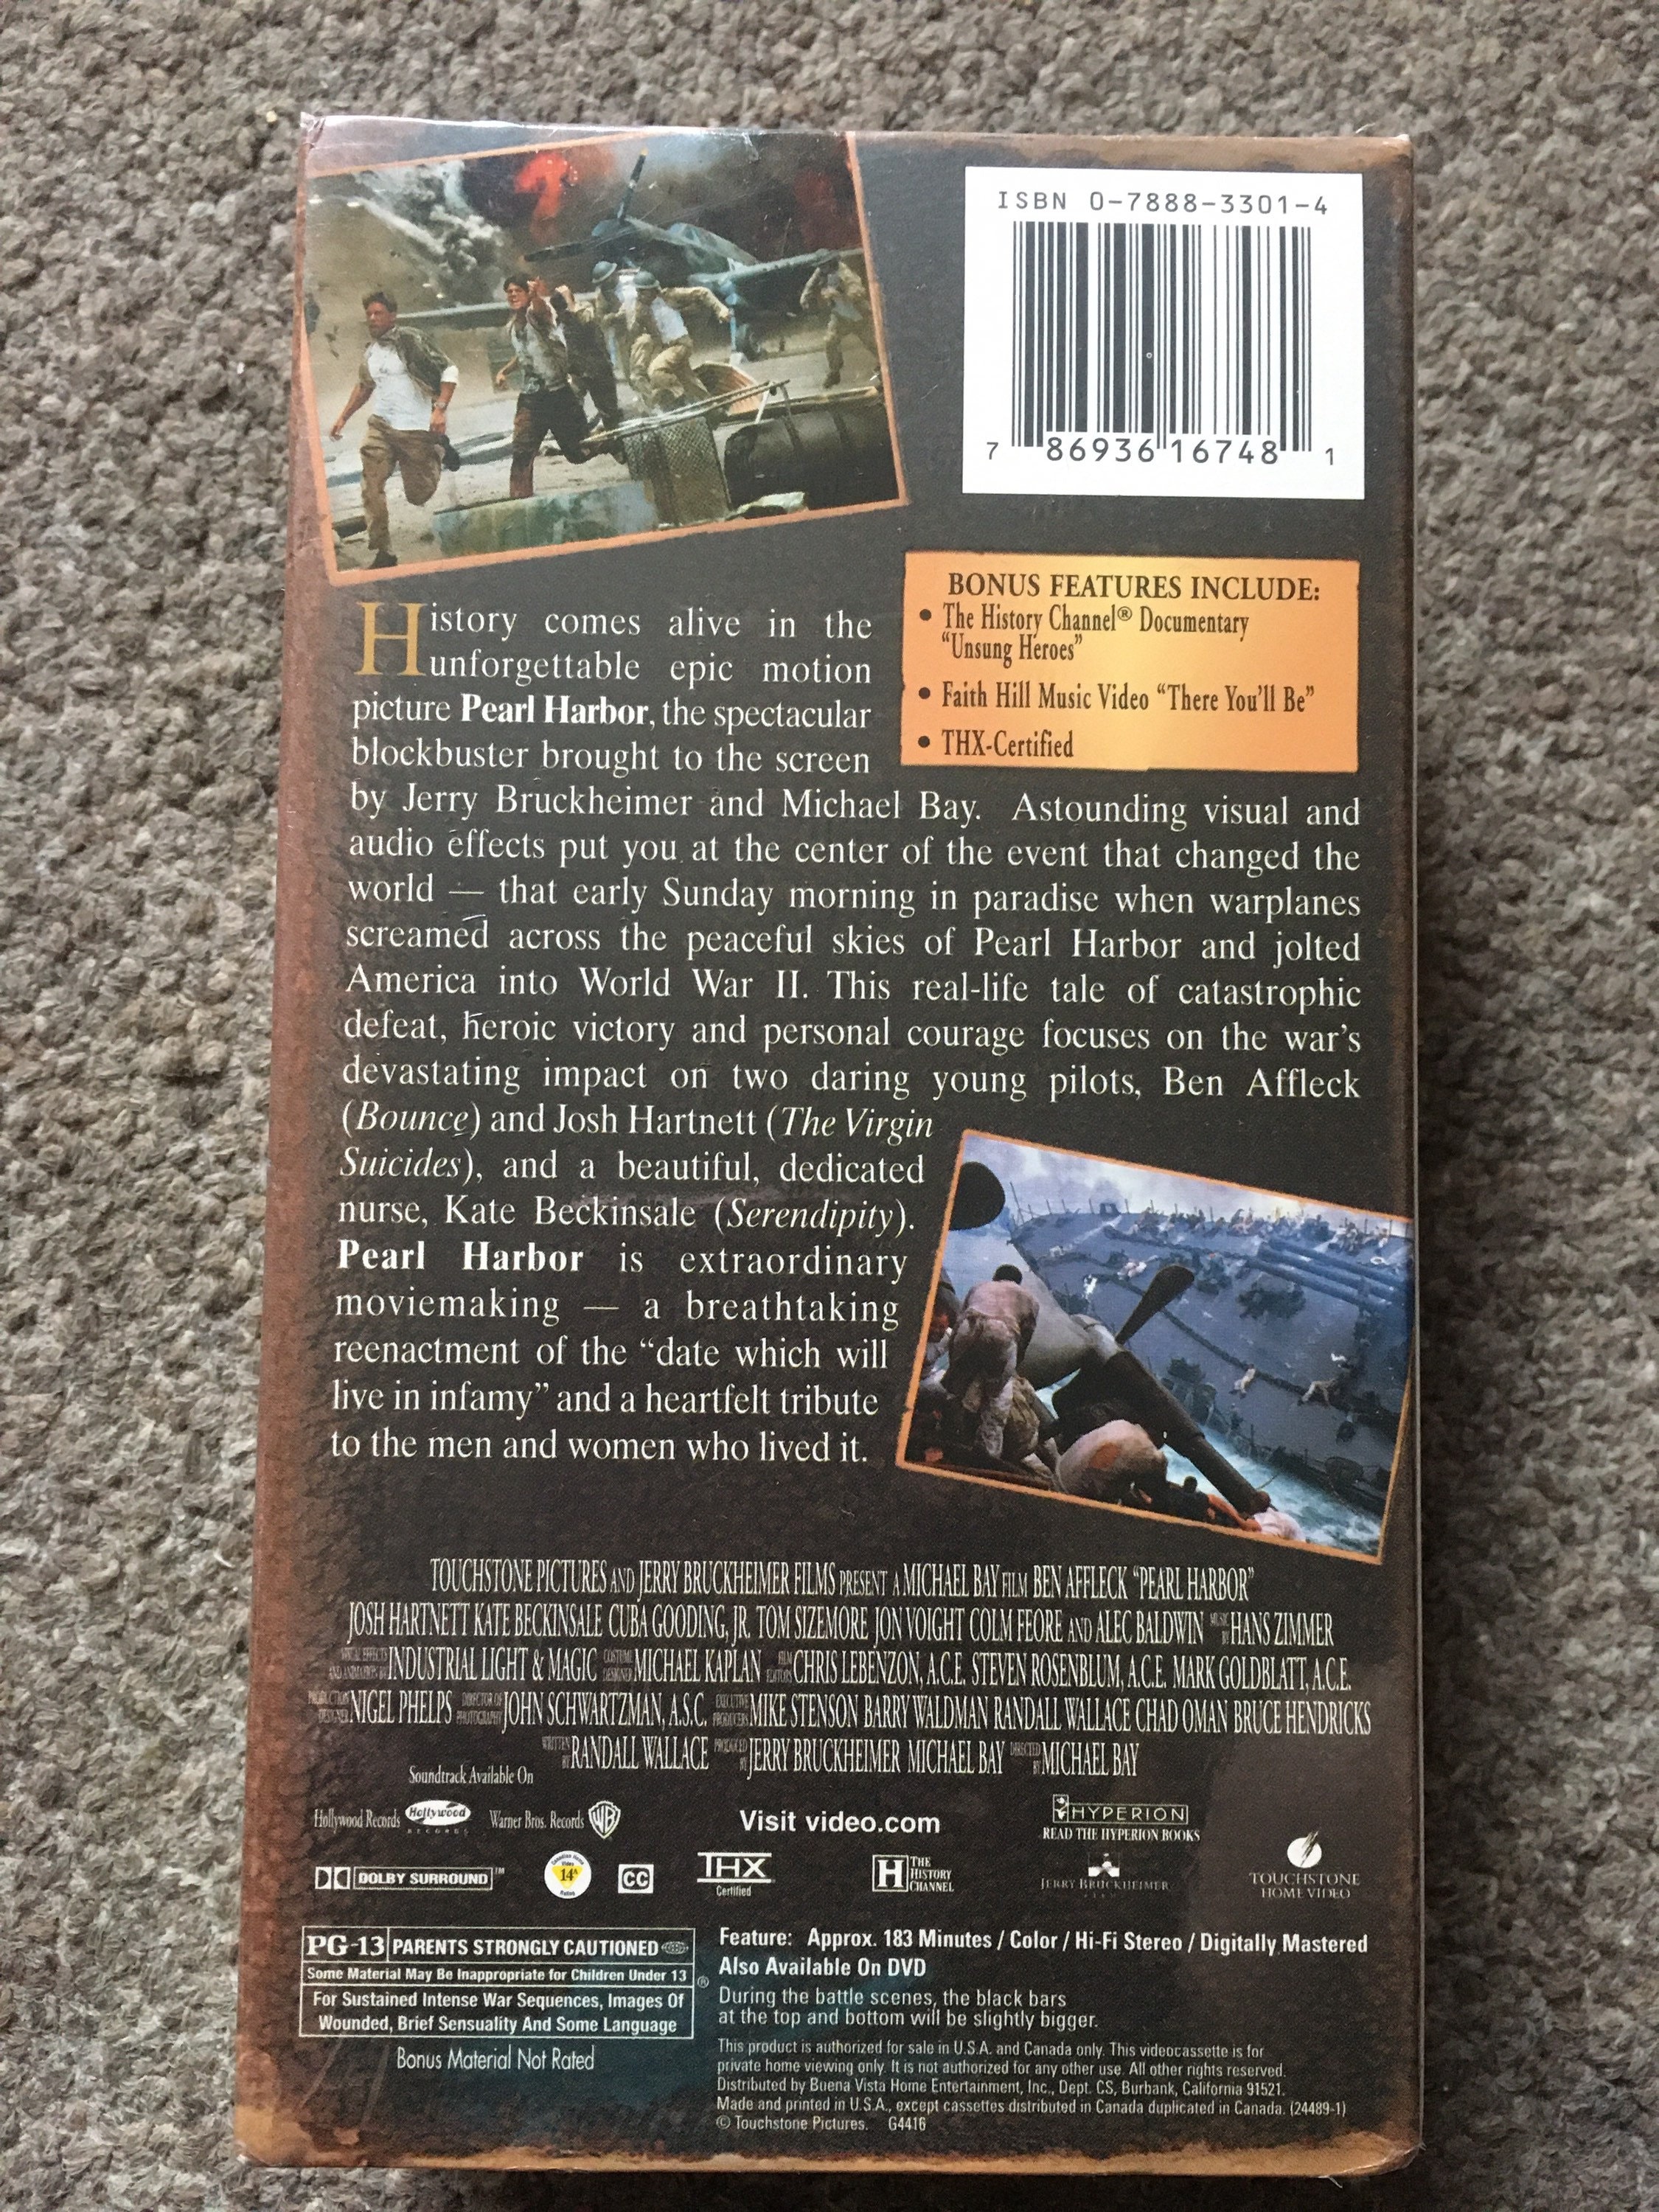 Pearl Harbor 2-VHS Video Tape Set 60th Anniversary 